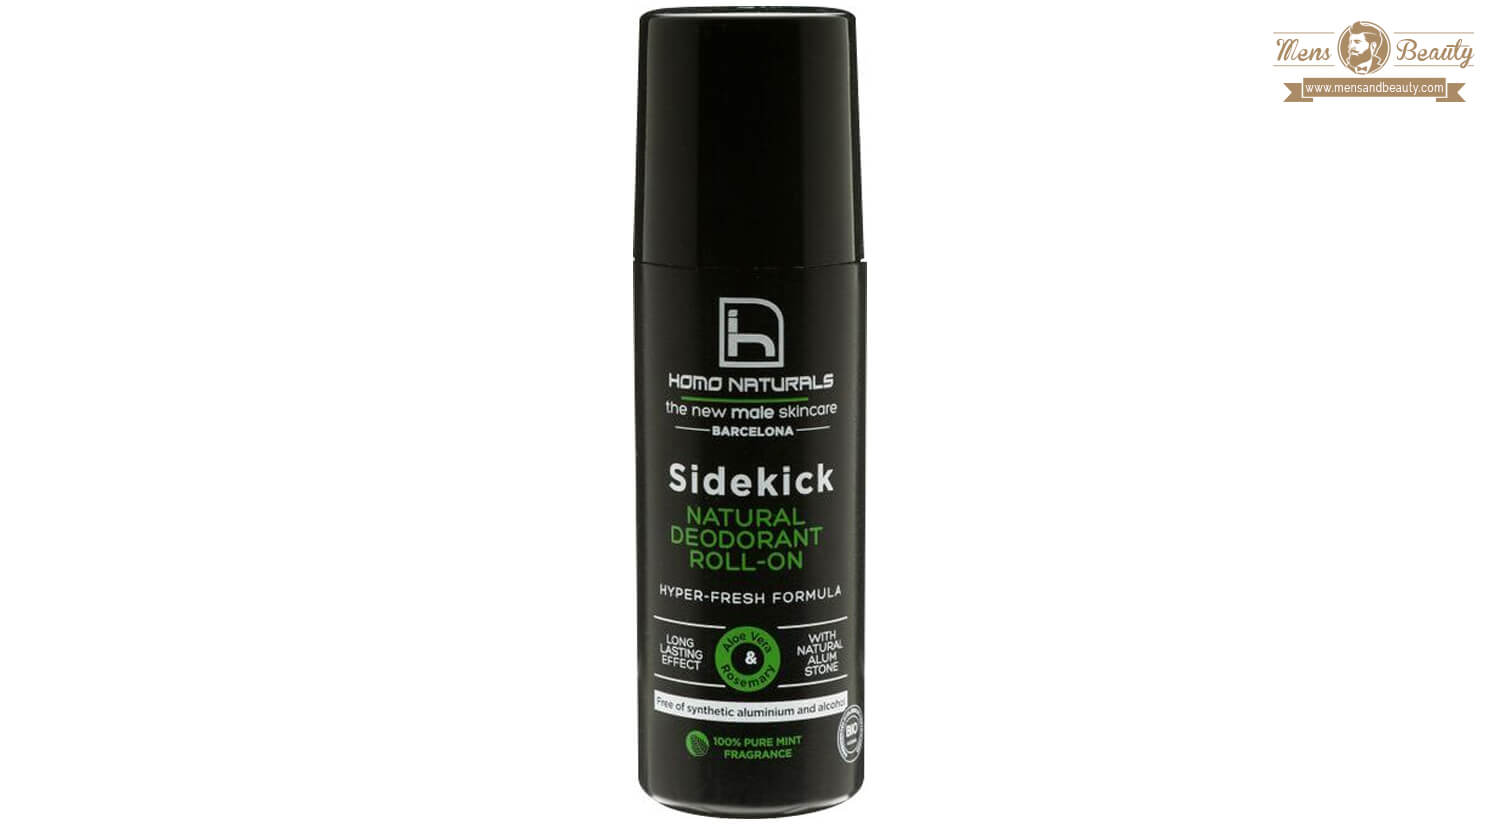 mejores productos belleza hombre cosmetica natural masculina desodorante natural hombre homo naturals sidekick natural deodorant roll on